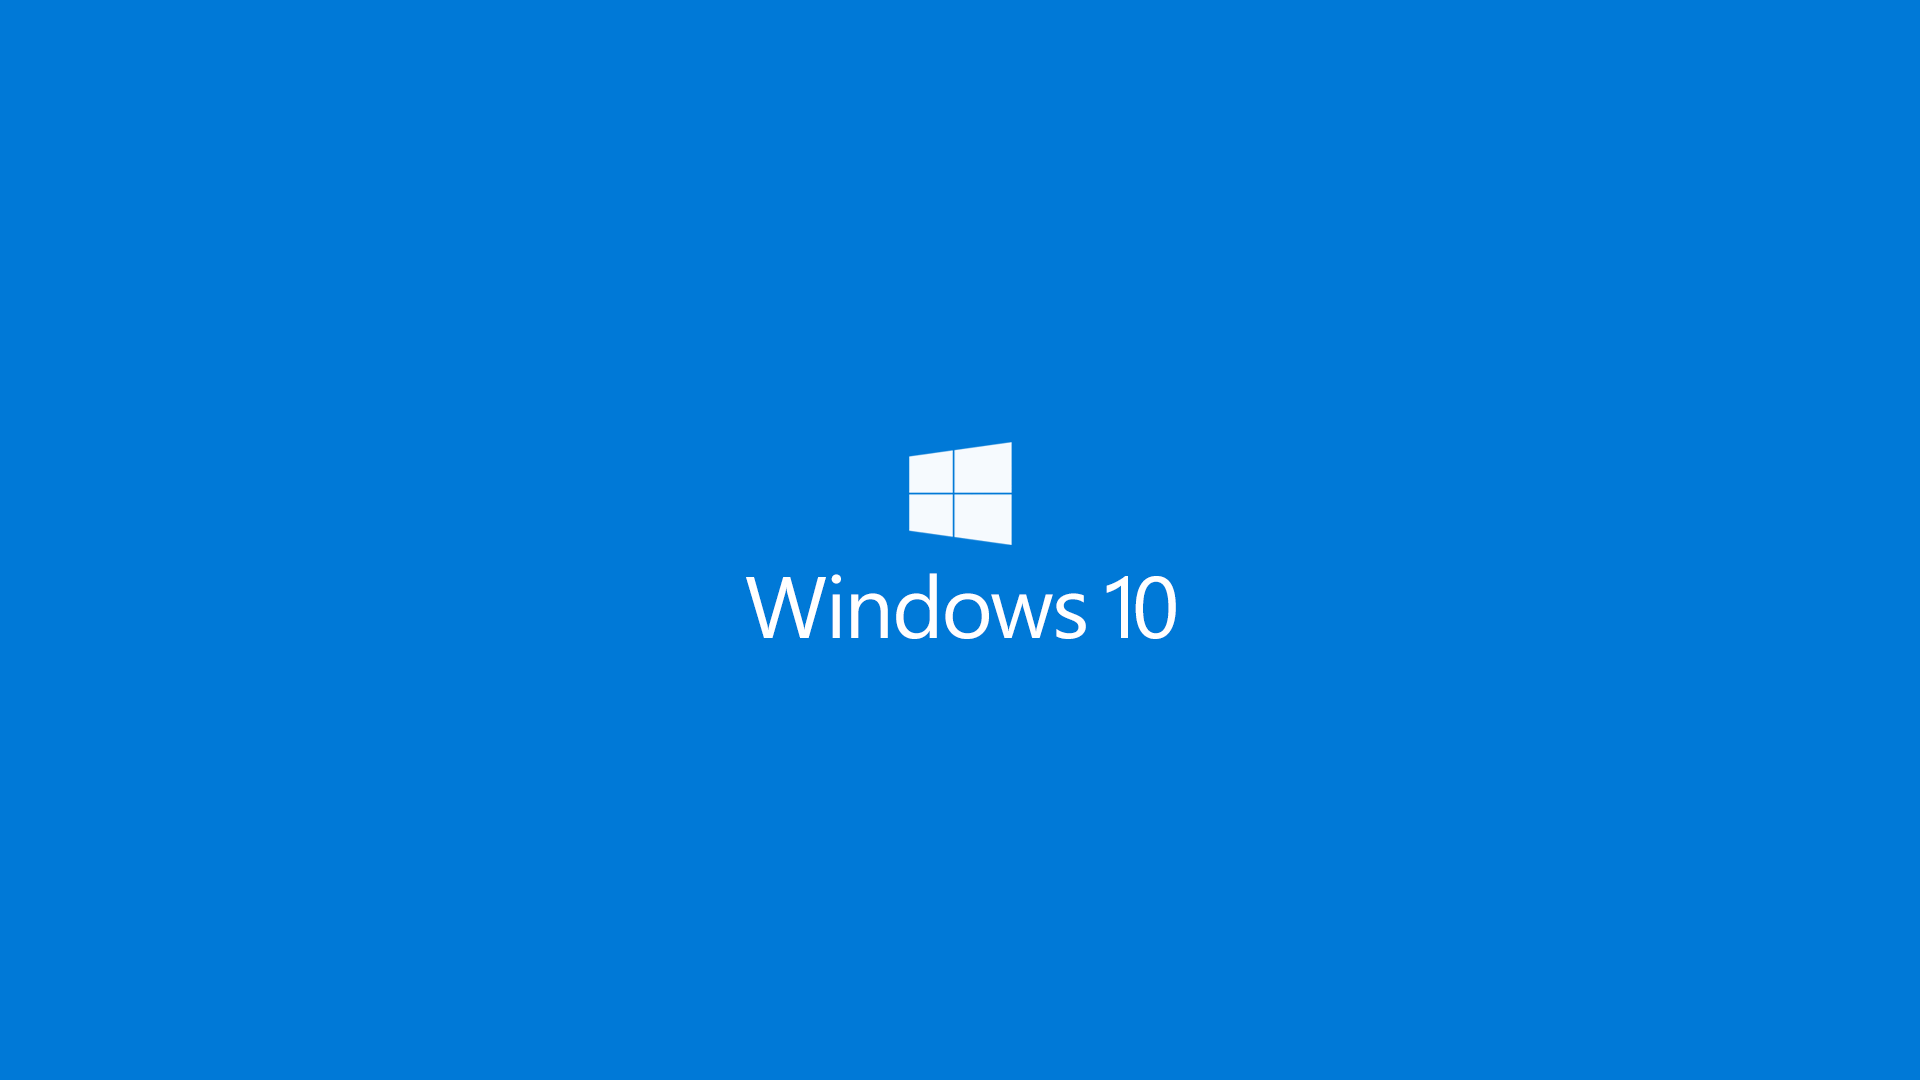 Windows 10 иероглифы. Обои с логотипом Windows. Windows 10. Обои виндовс 10. Логотип Windows 10.